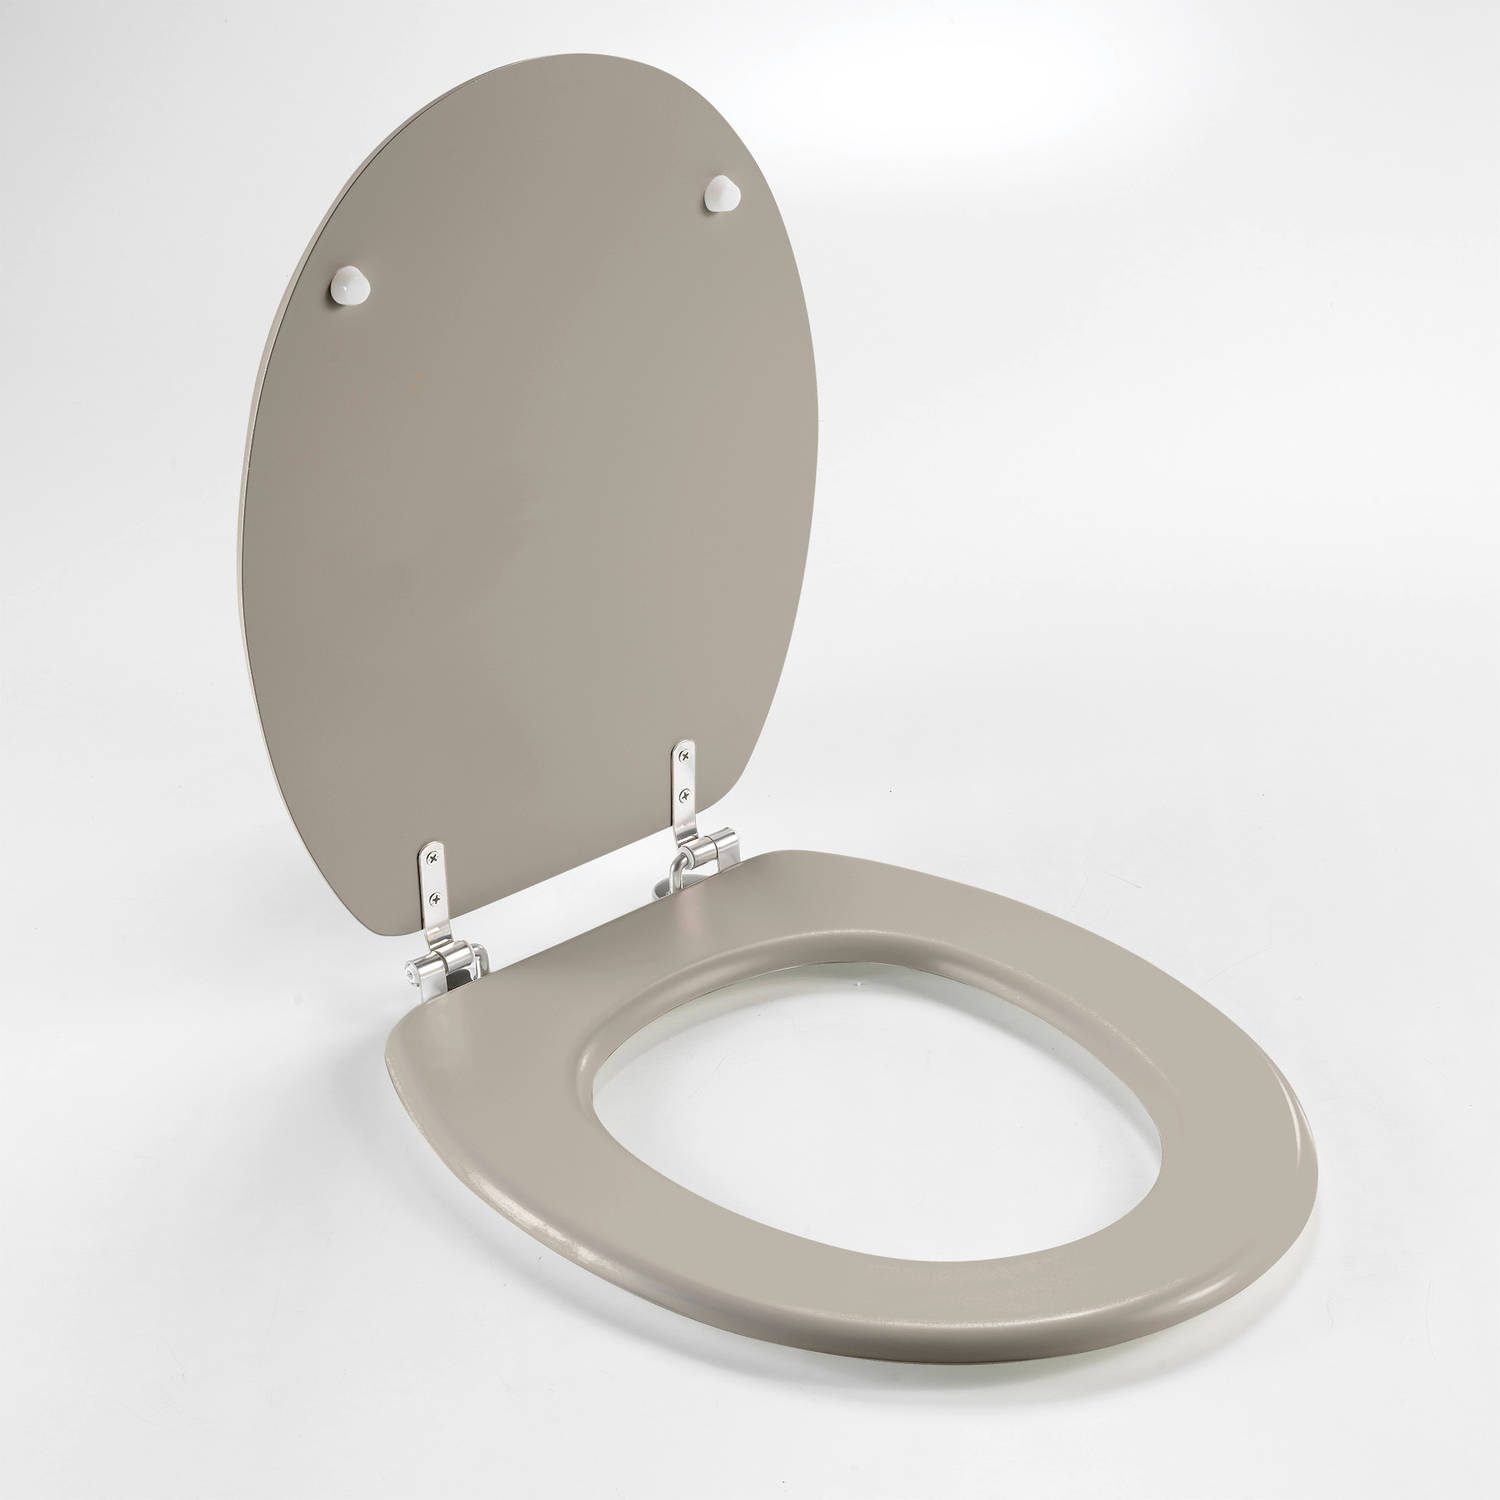 Wicotex-Toiletbril-WC bril MDF mat taupe inclusief metallic scharnieren.